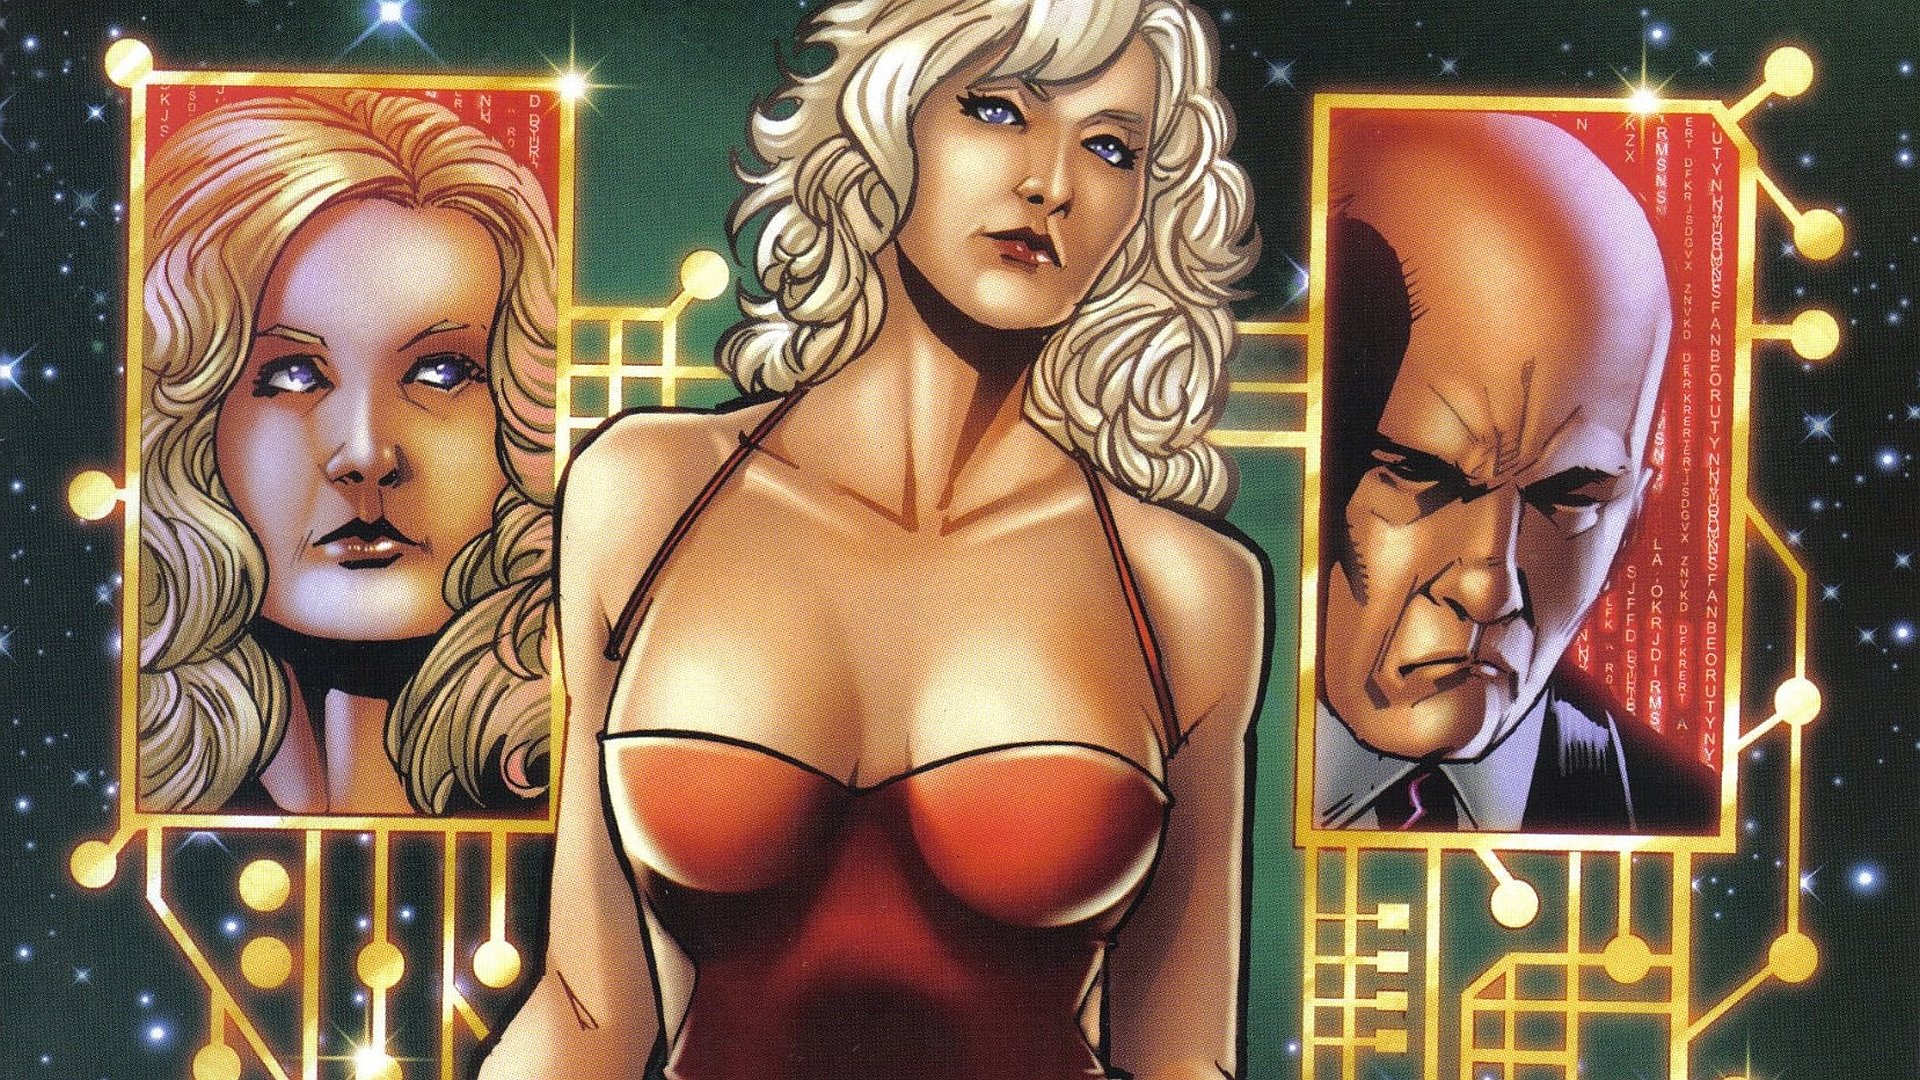 Free Battlestar Galactica comics high quality wallpaper ID:250293 for 1080p computer